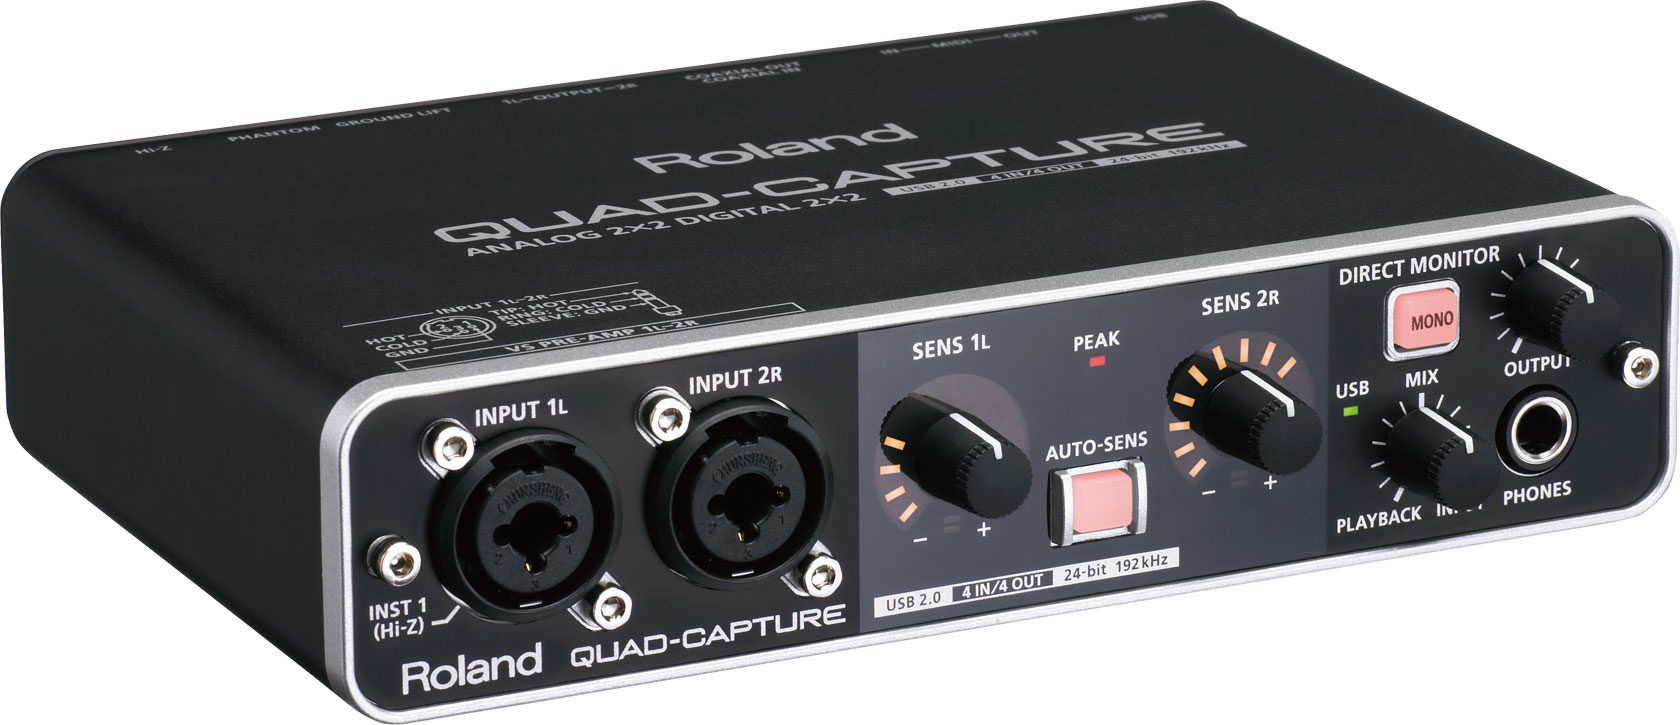 Roland UA-55 Quad-Capture USB 2.0 Audio Interface | zZounds